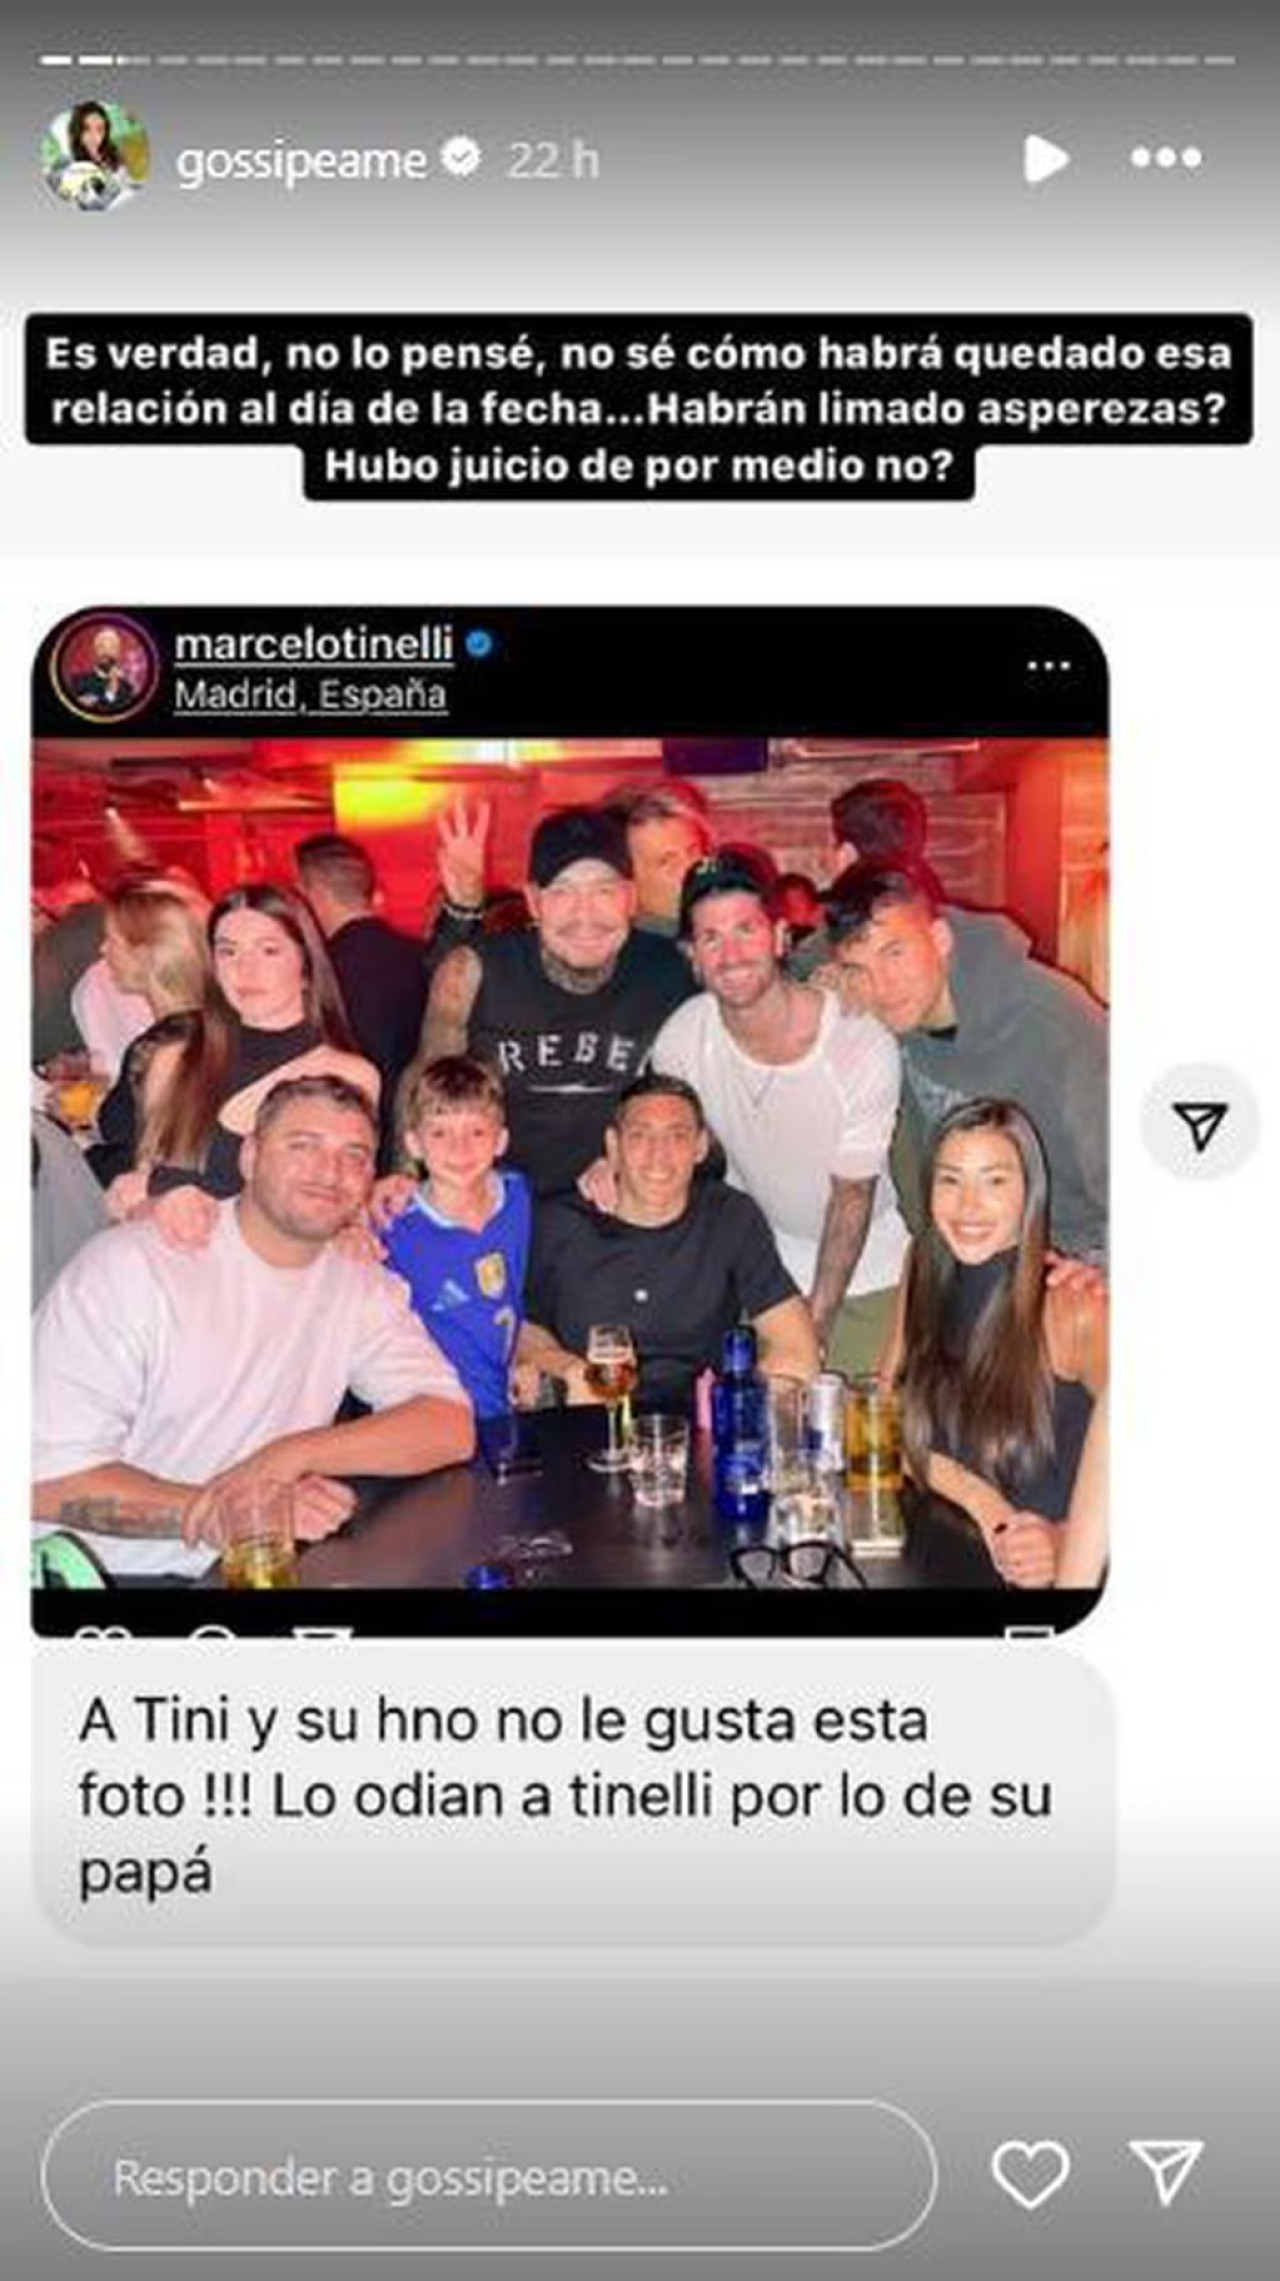 Rumores de affaire entre Rodrigo de Paul y Juanita Tinelli. Foto: Instagram/gossipeame.